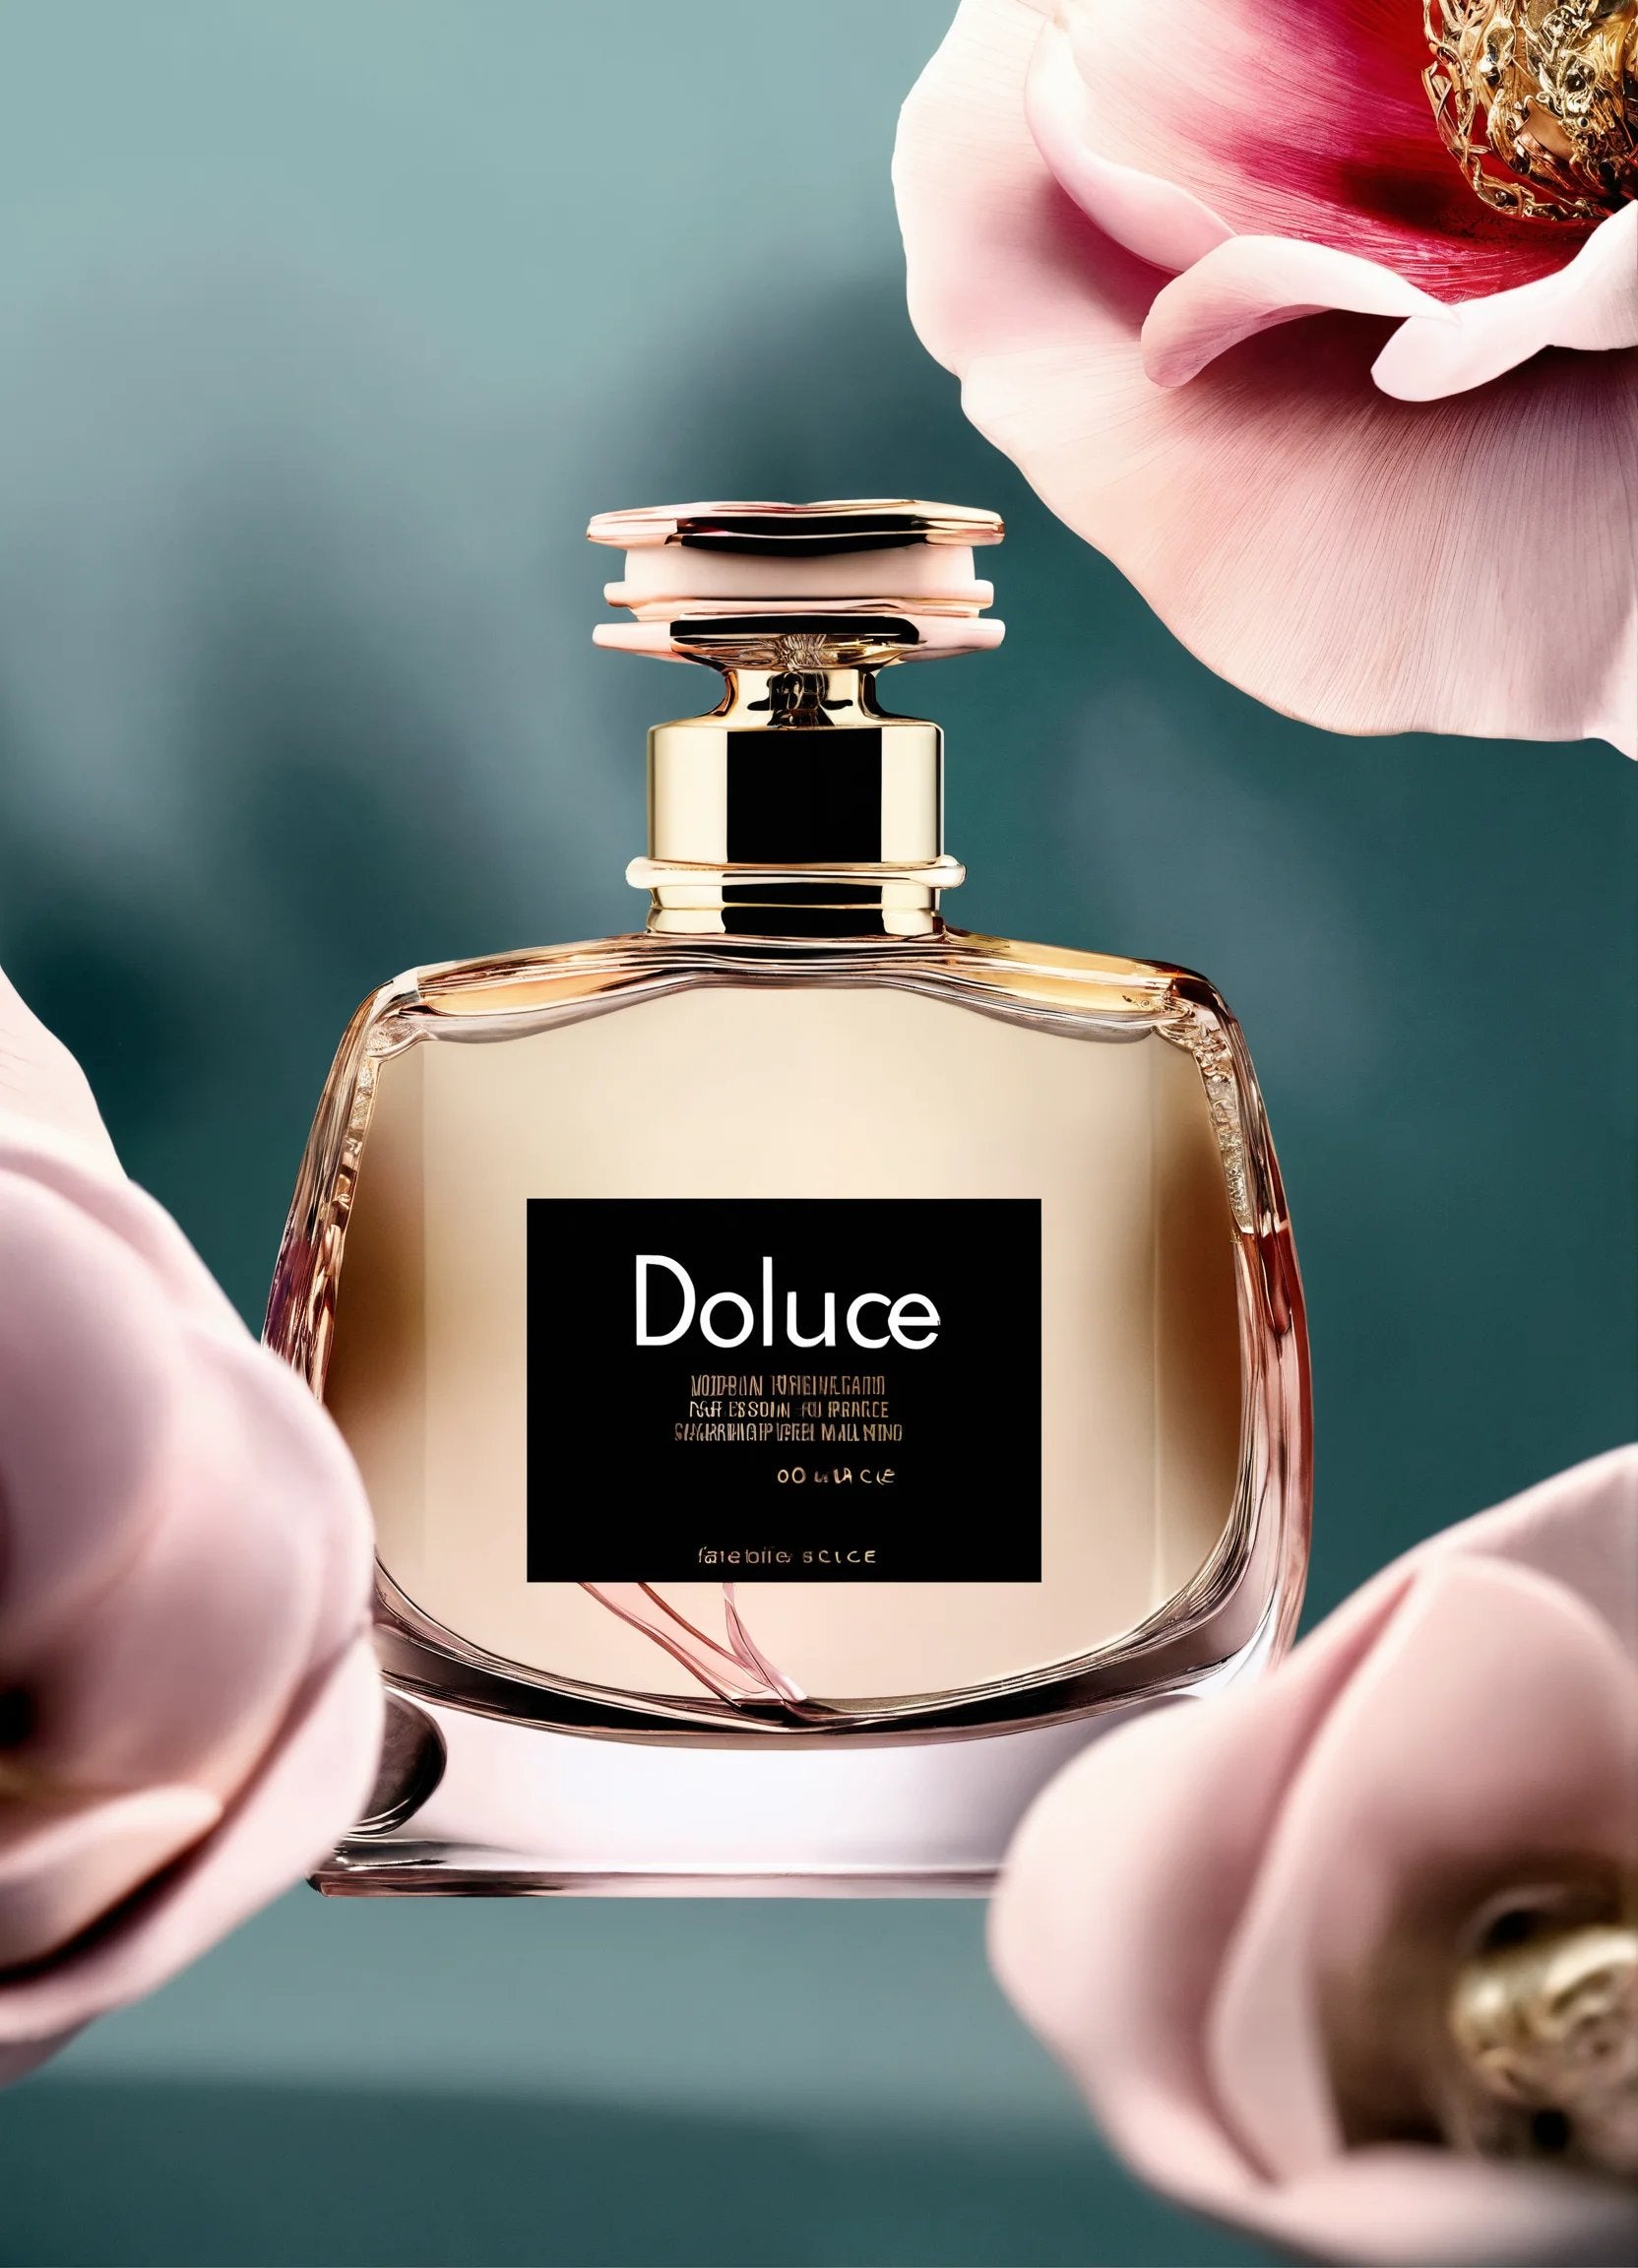 Parfum Dolruce